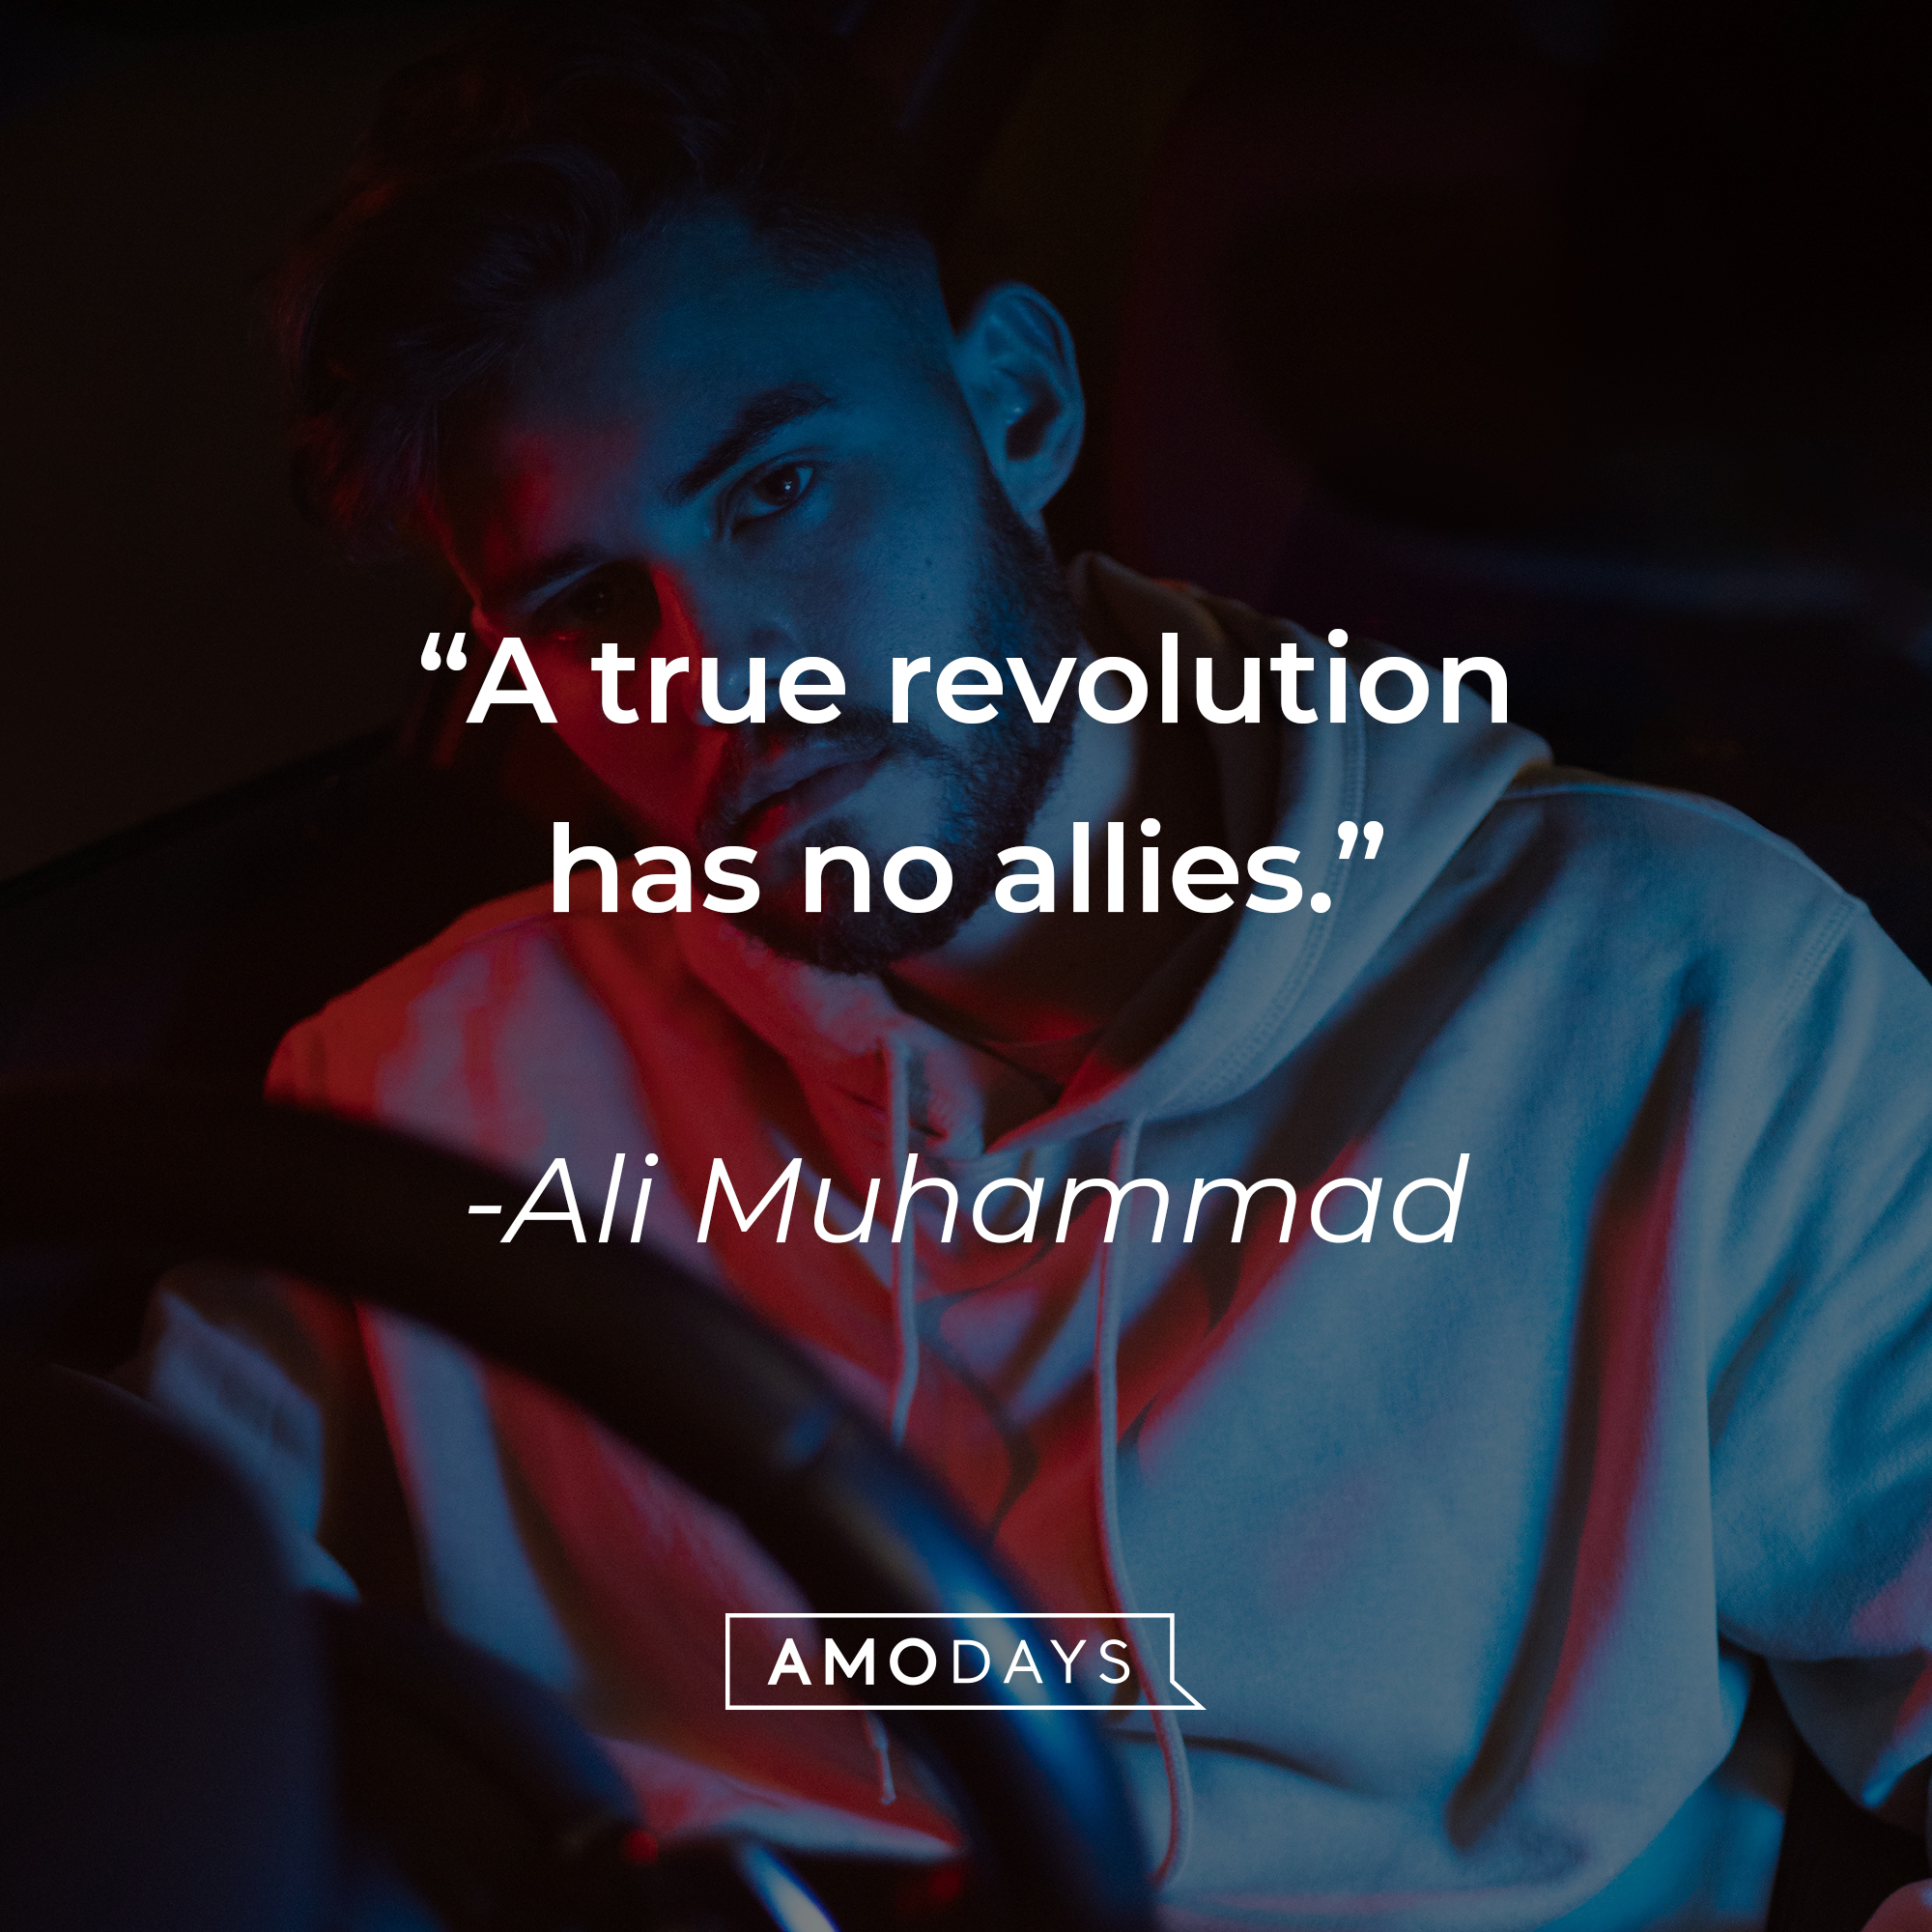 Ali Muhammad's quote: "A true revolution has no allies." | Source: unsplash.com